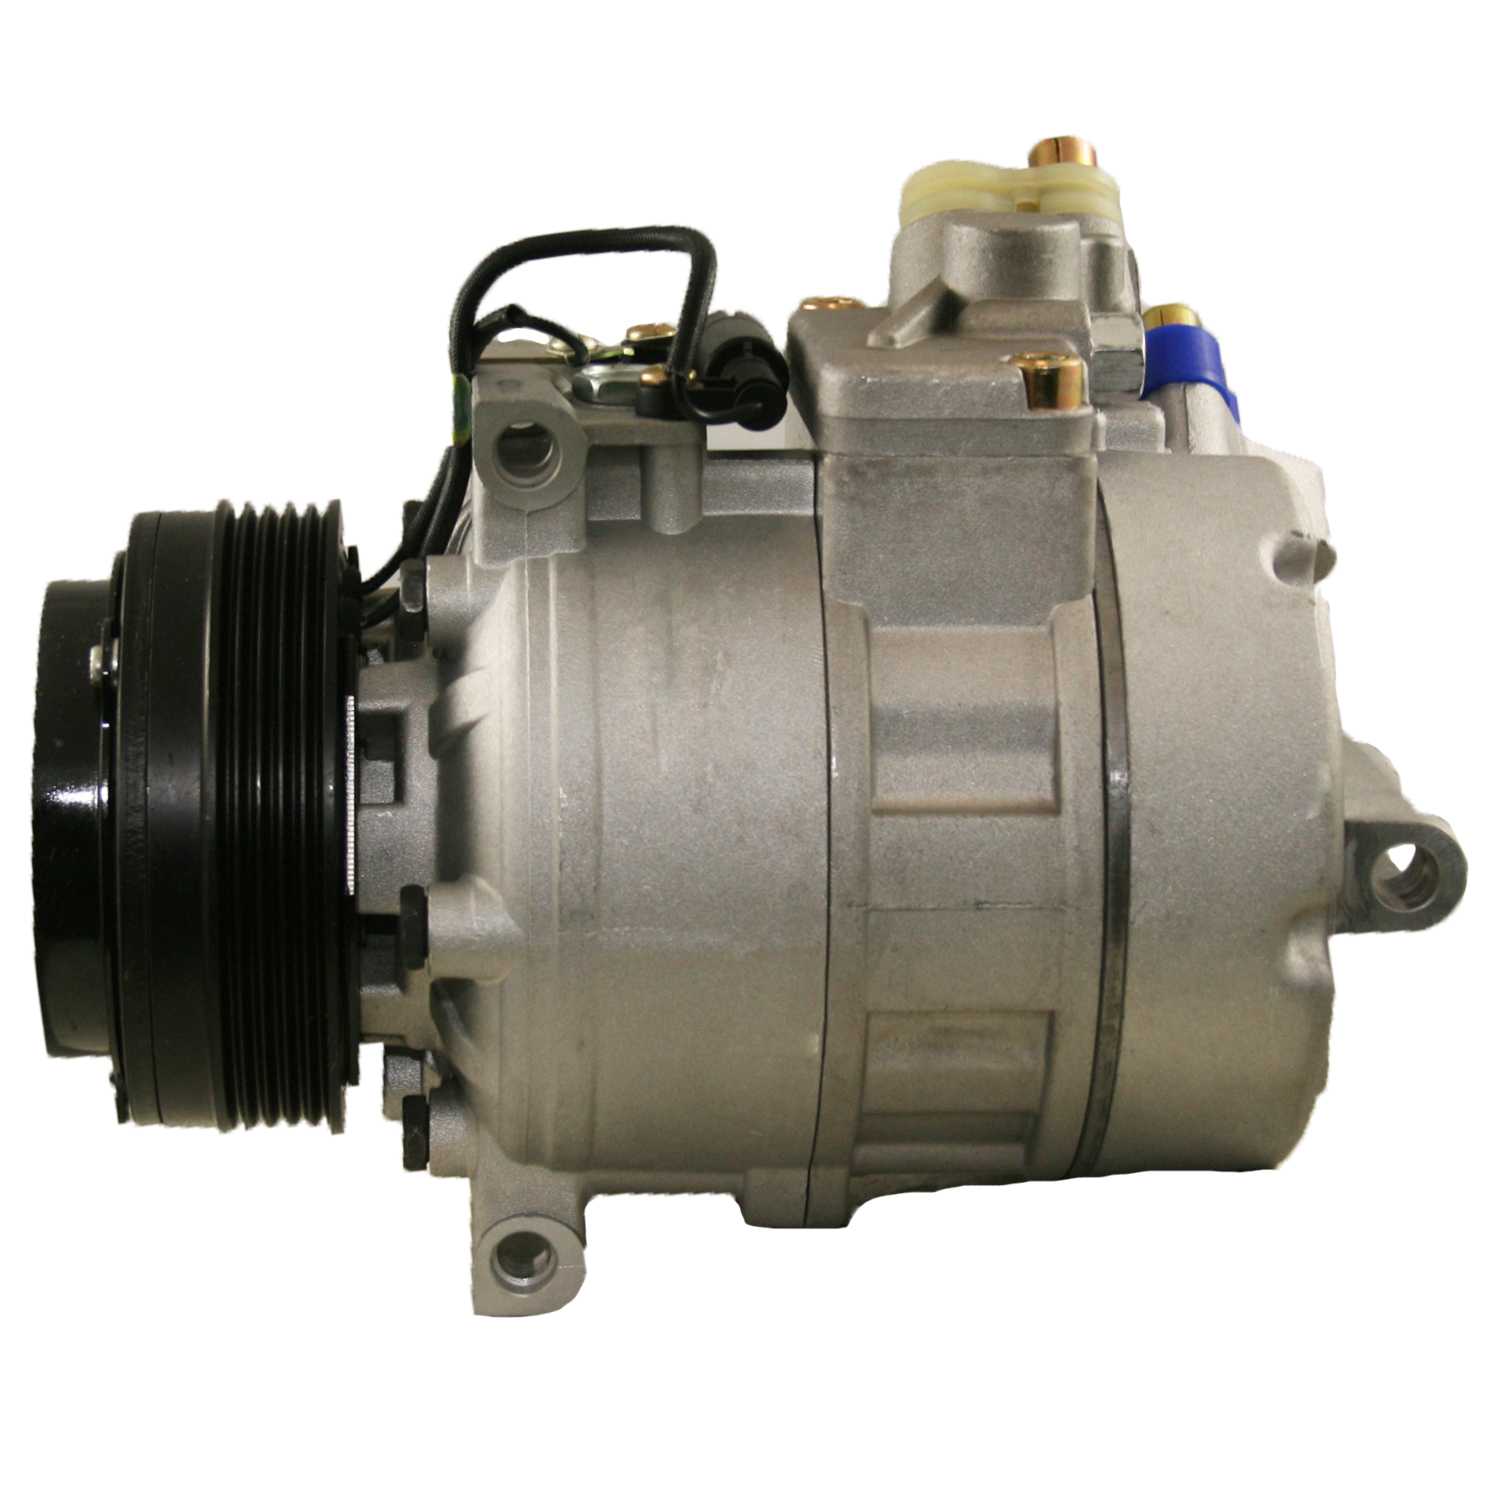 TCW Compressor 31750.501NEW New Product Image field_60b6a13a6e67c